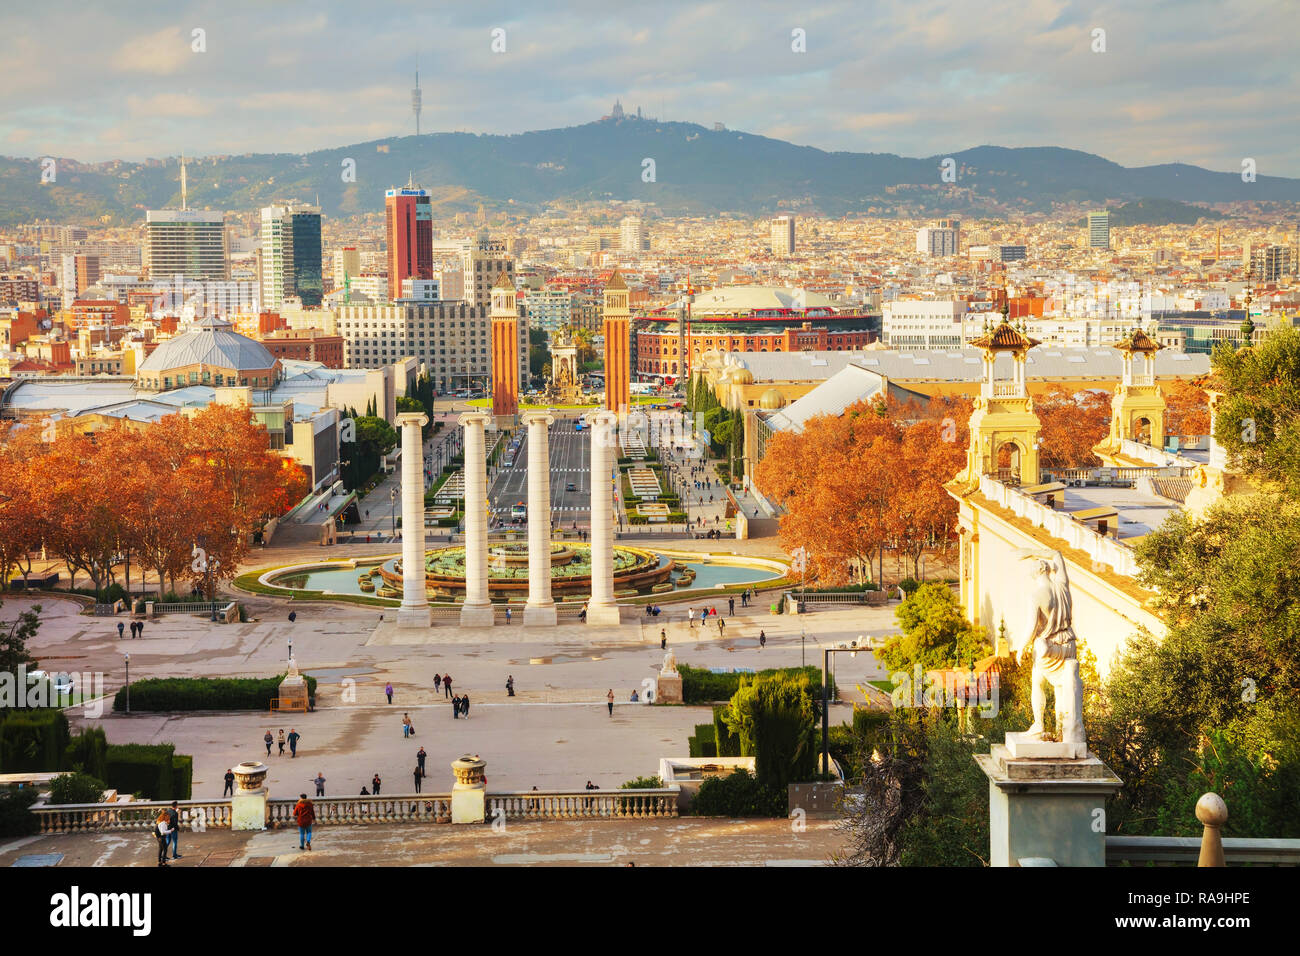 BARCELONA - Dezember 14: Überblick über die Stadt von der Montjuic Hügel am Dezember 14, 2018 in Barcelona, Spanien. Stockfoto